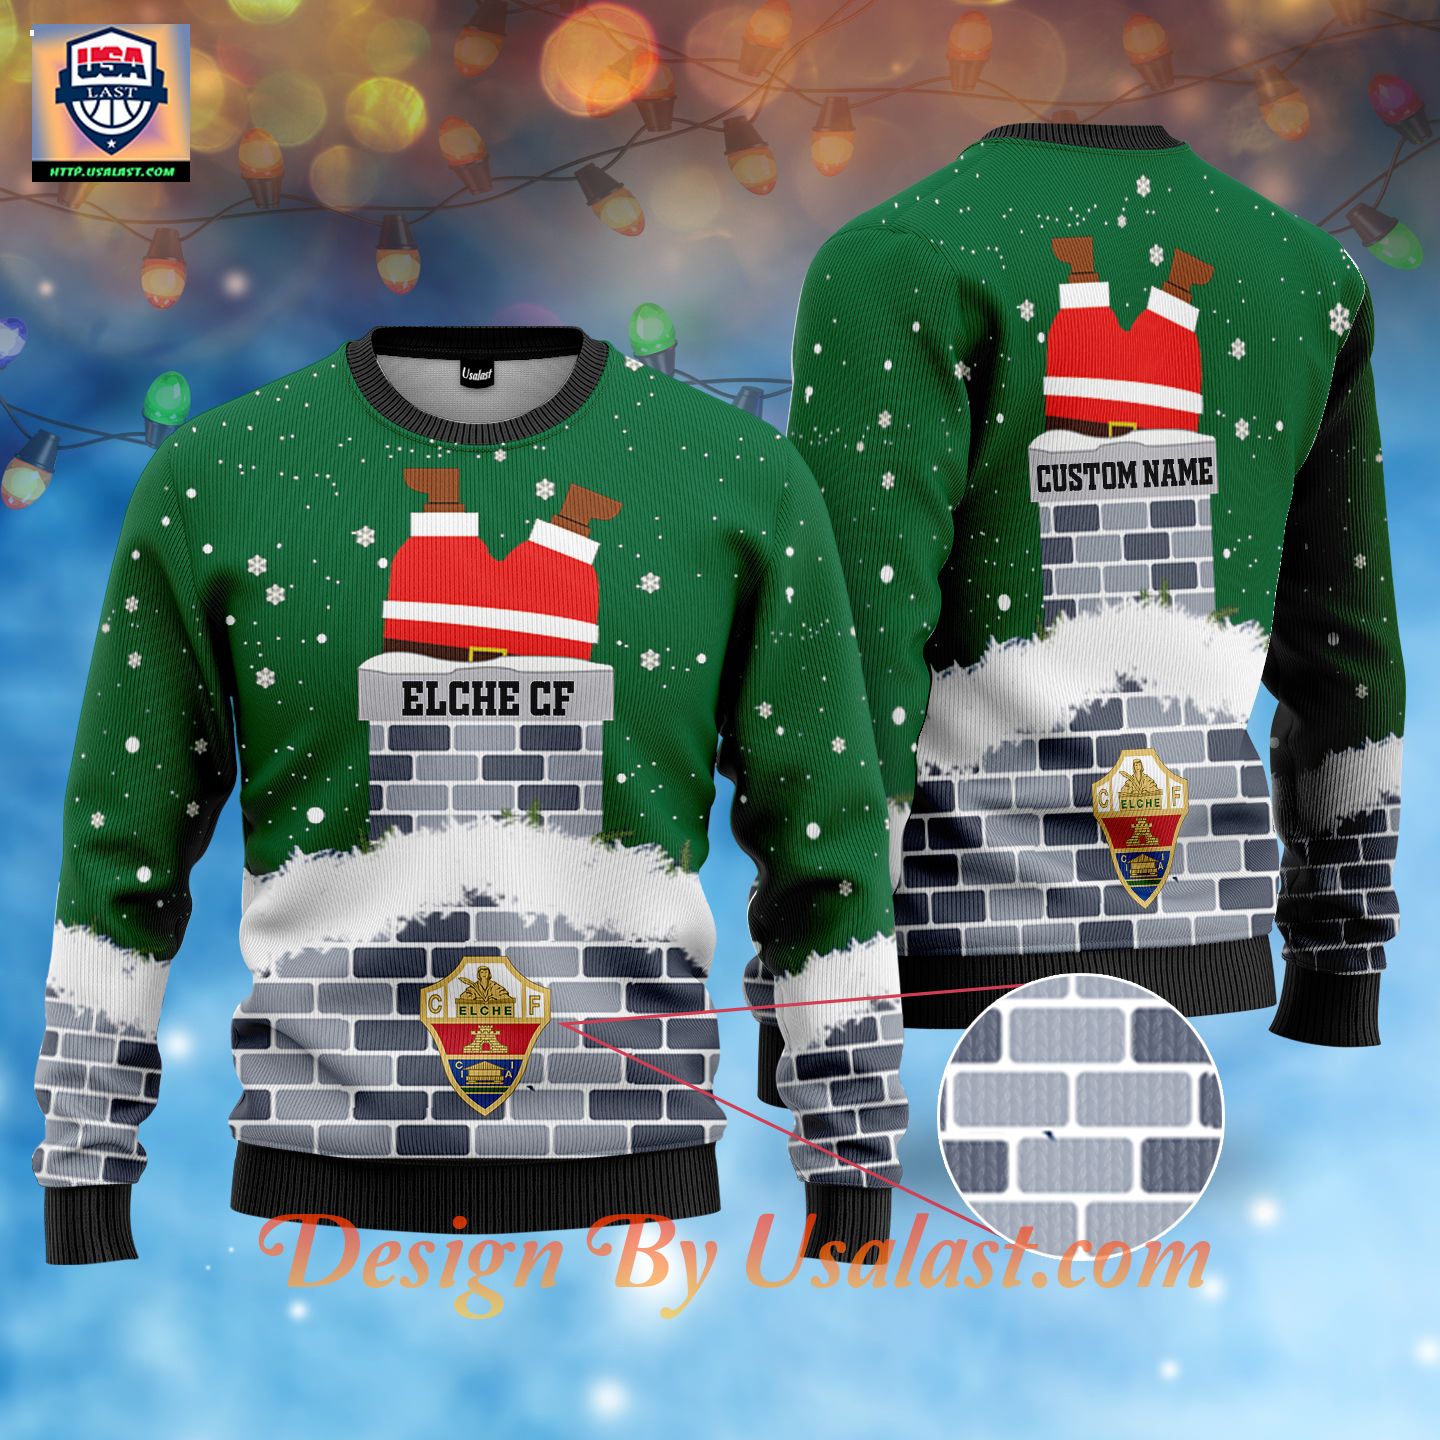 Discount Elche CF Santa Claus Custom Name Ugly Christmas Sweater